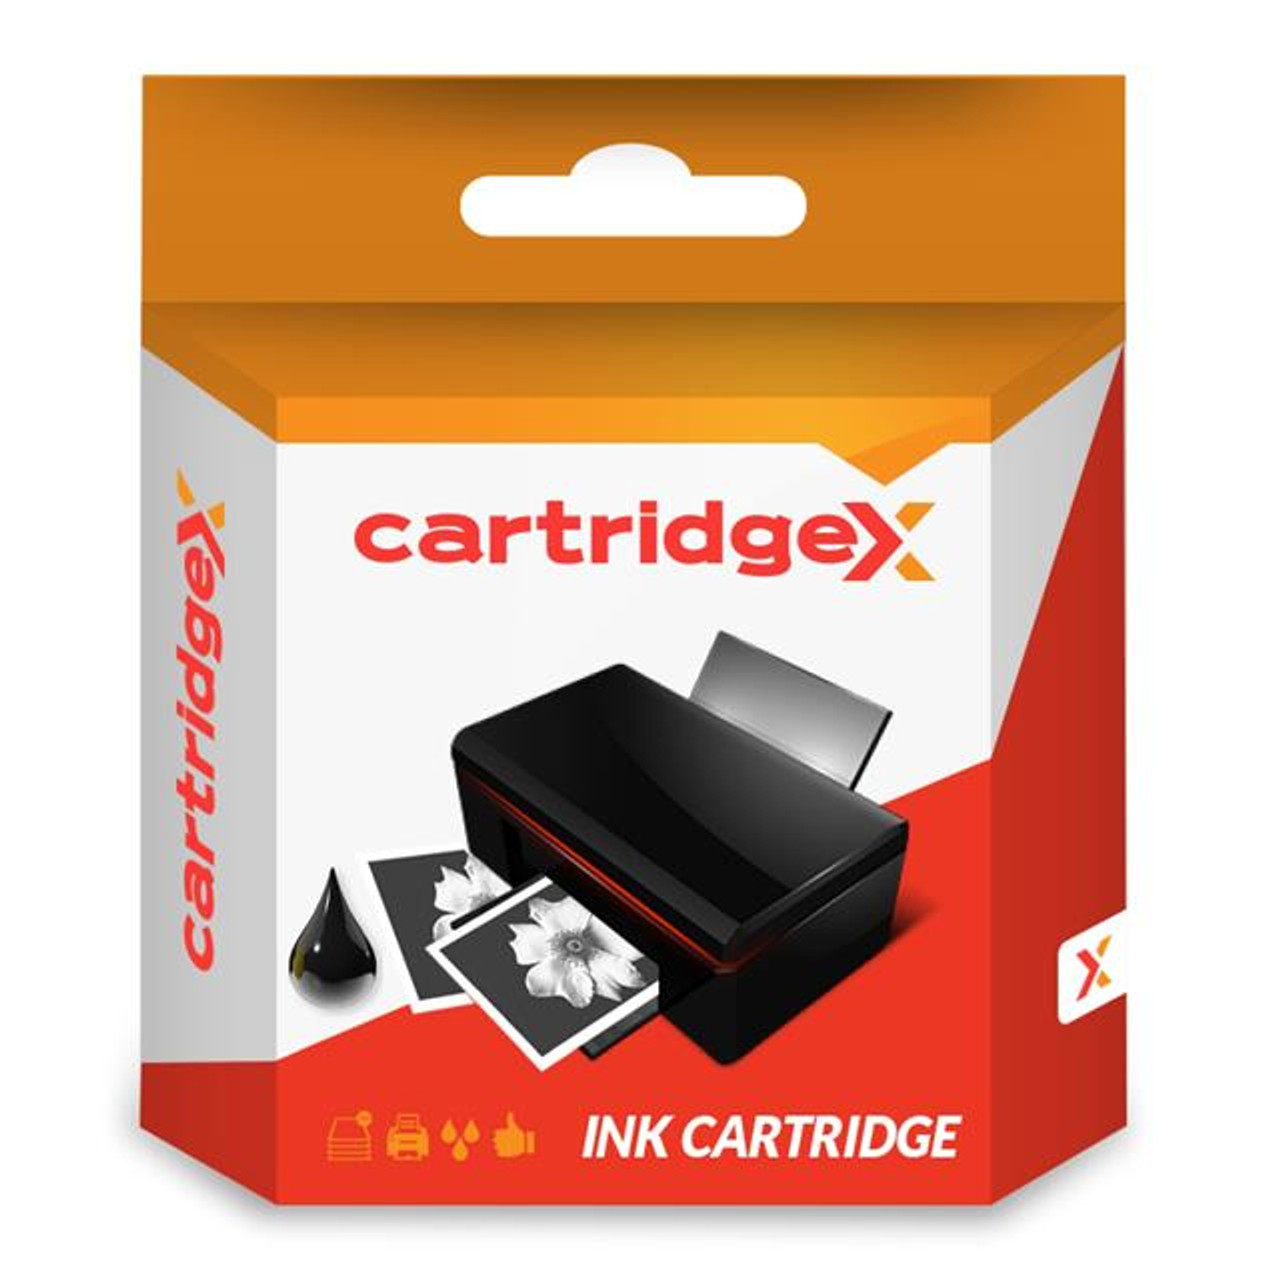 Compatible Black Ink Cartridge For Brother Mfc-3340 Mfc-3340cn Mfc-3342 Lc900bk